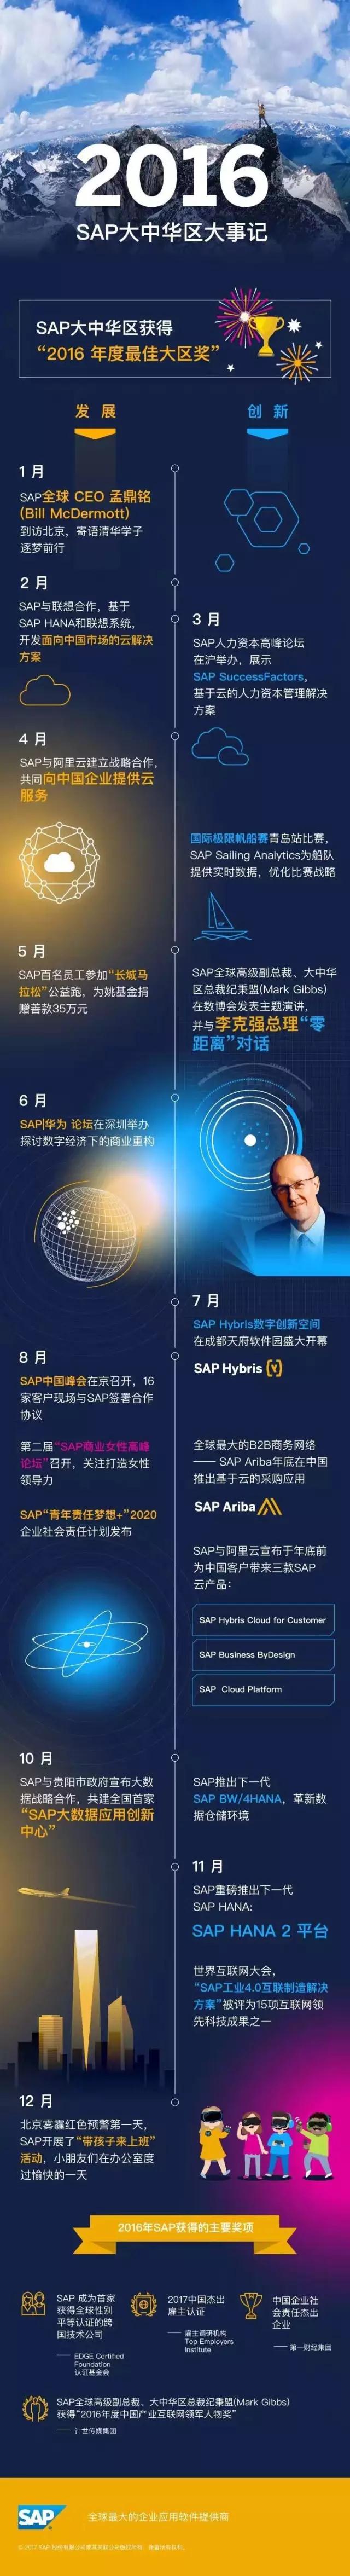 SAP大事记-工博